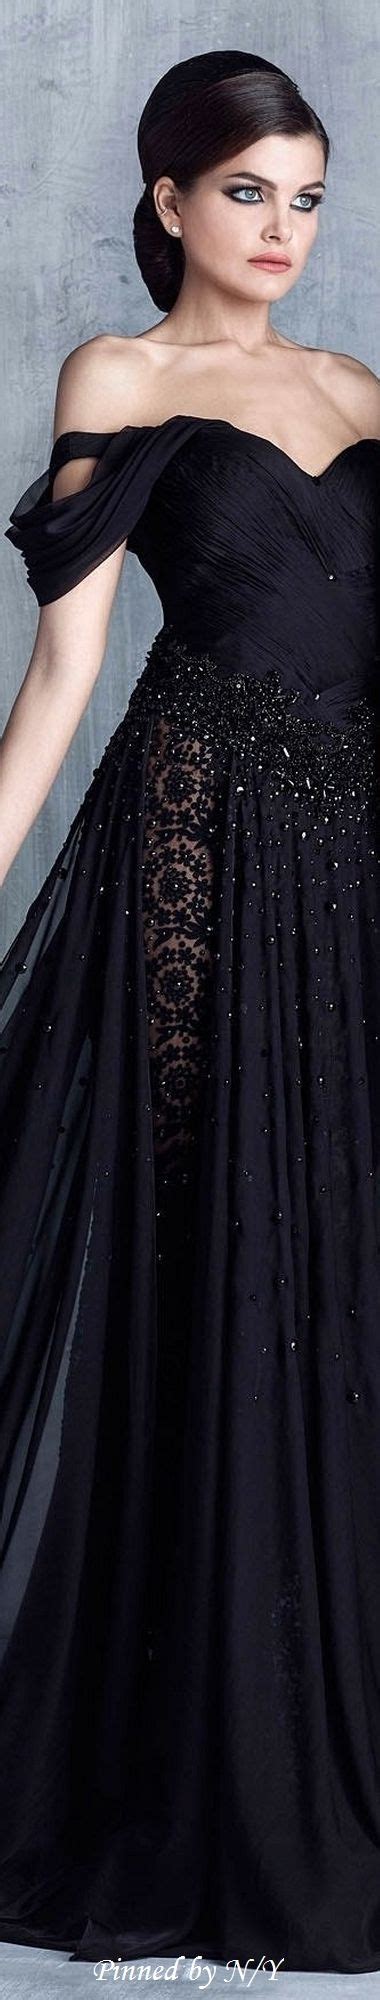 Tony Chaaya Couture Ss 2016 Black Dress Makeup Black Dress Outfit